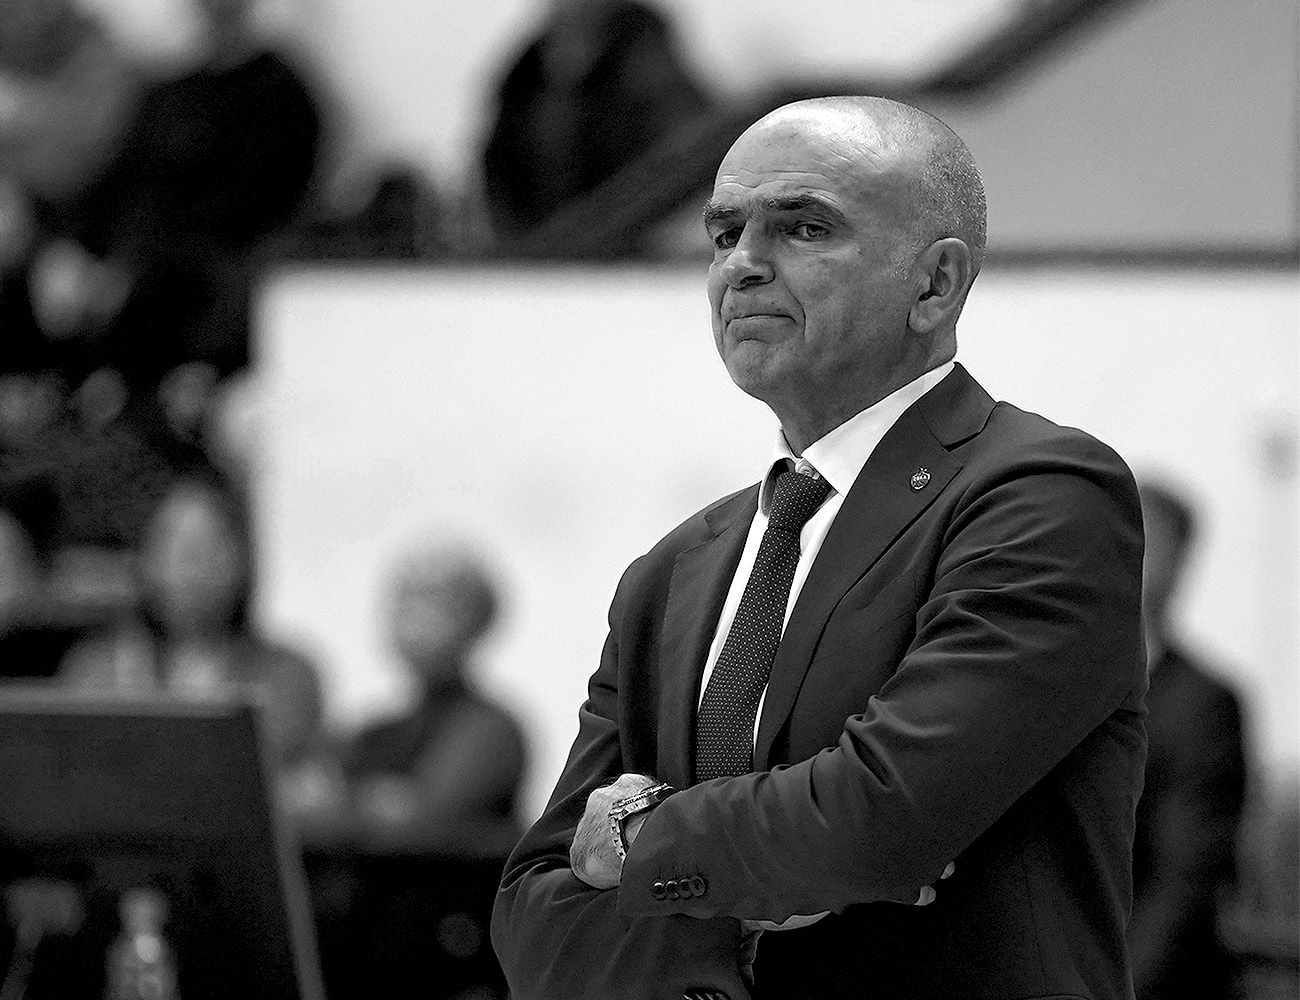 CSKA-2 head coach Predrag Badnjarevic has passed away